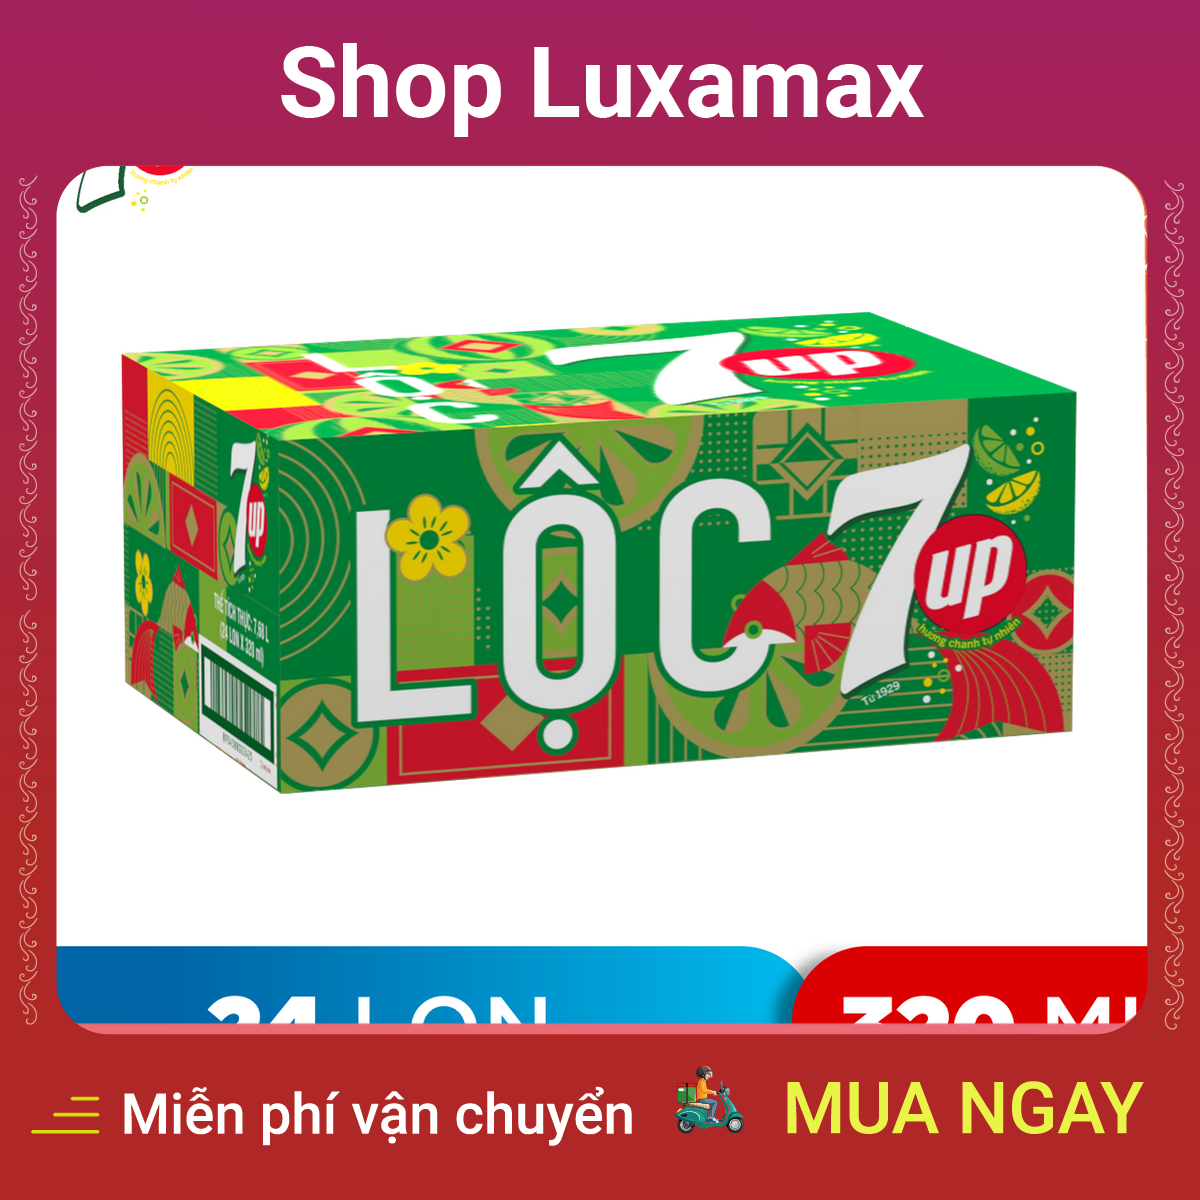 Thùng 24 Lon Nước Ngọt Có Gaz 7Up (320ml/lon) DTK98578829 - Shop LuxaMax - 24 cans of freshwater with gaz 7up (320ml / can)